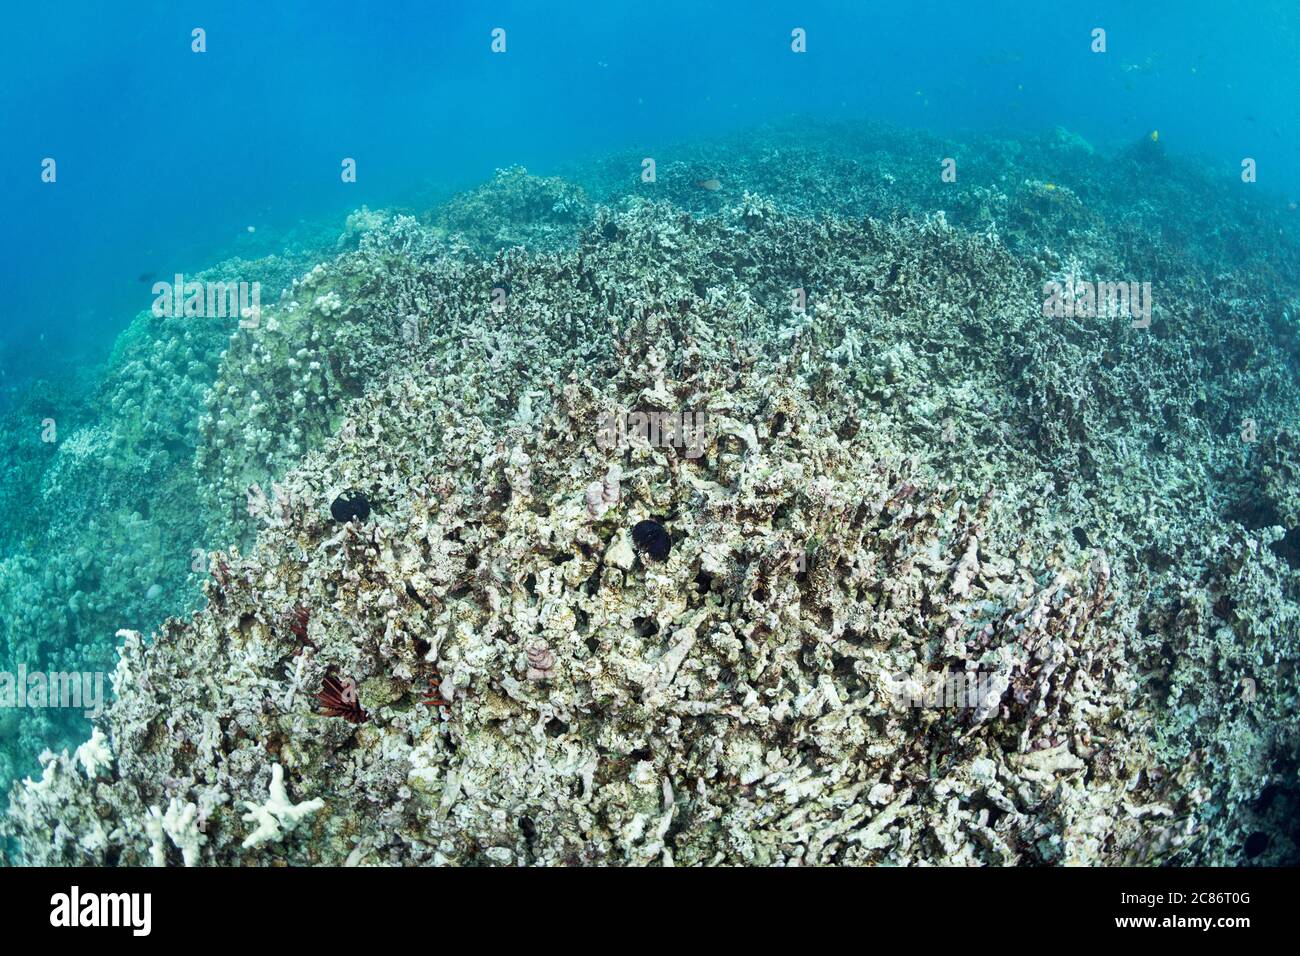 Un campo di macerie di coralli spezzate, dove una volta c'era una barriera corallina vivente, Honaunau Bay, aka Two Step, South Kona, Hawaii Island, The Big Island, Hawaii, USA Foto Stock